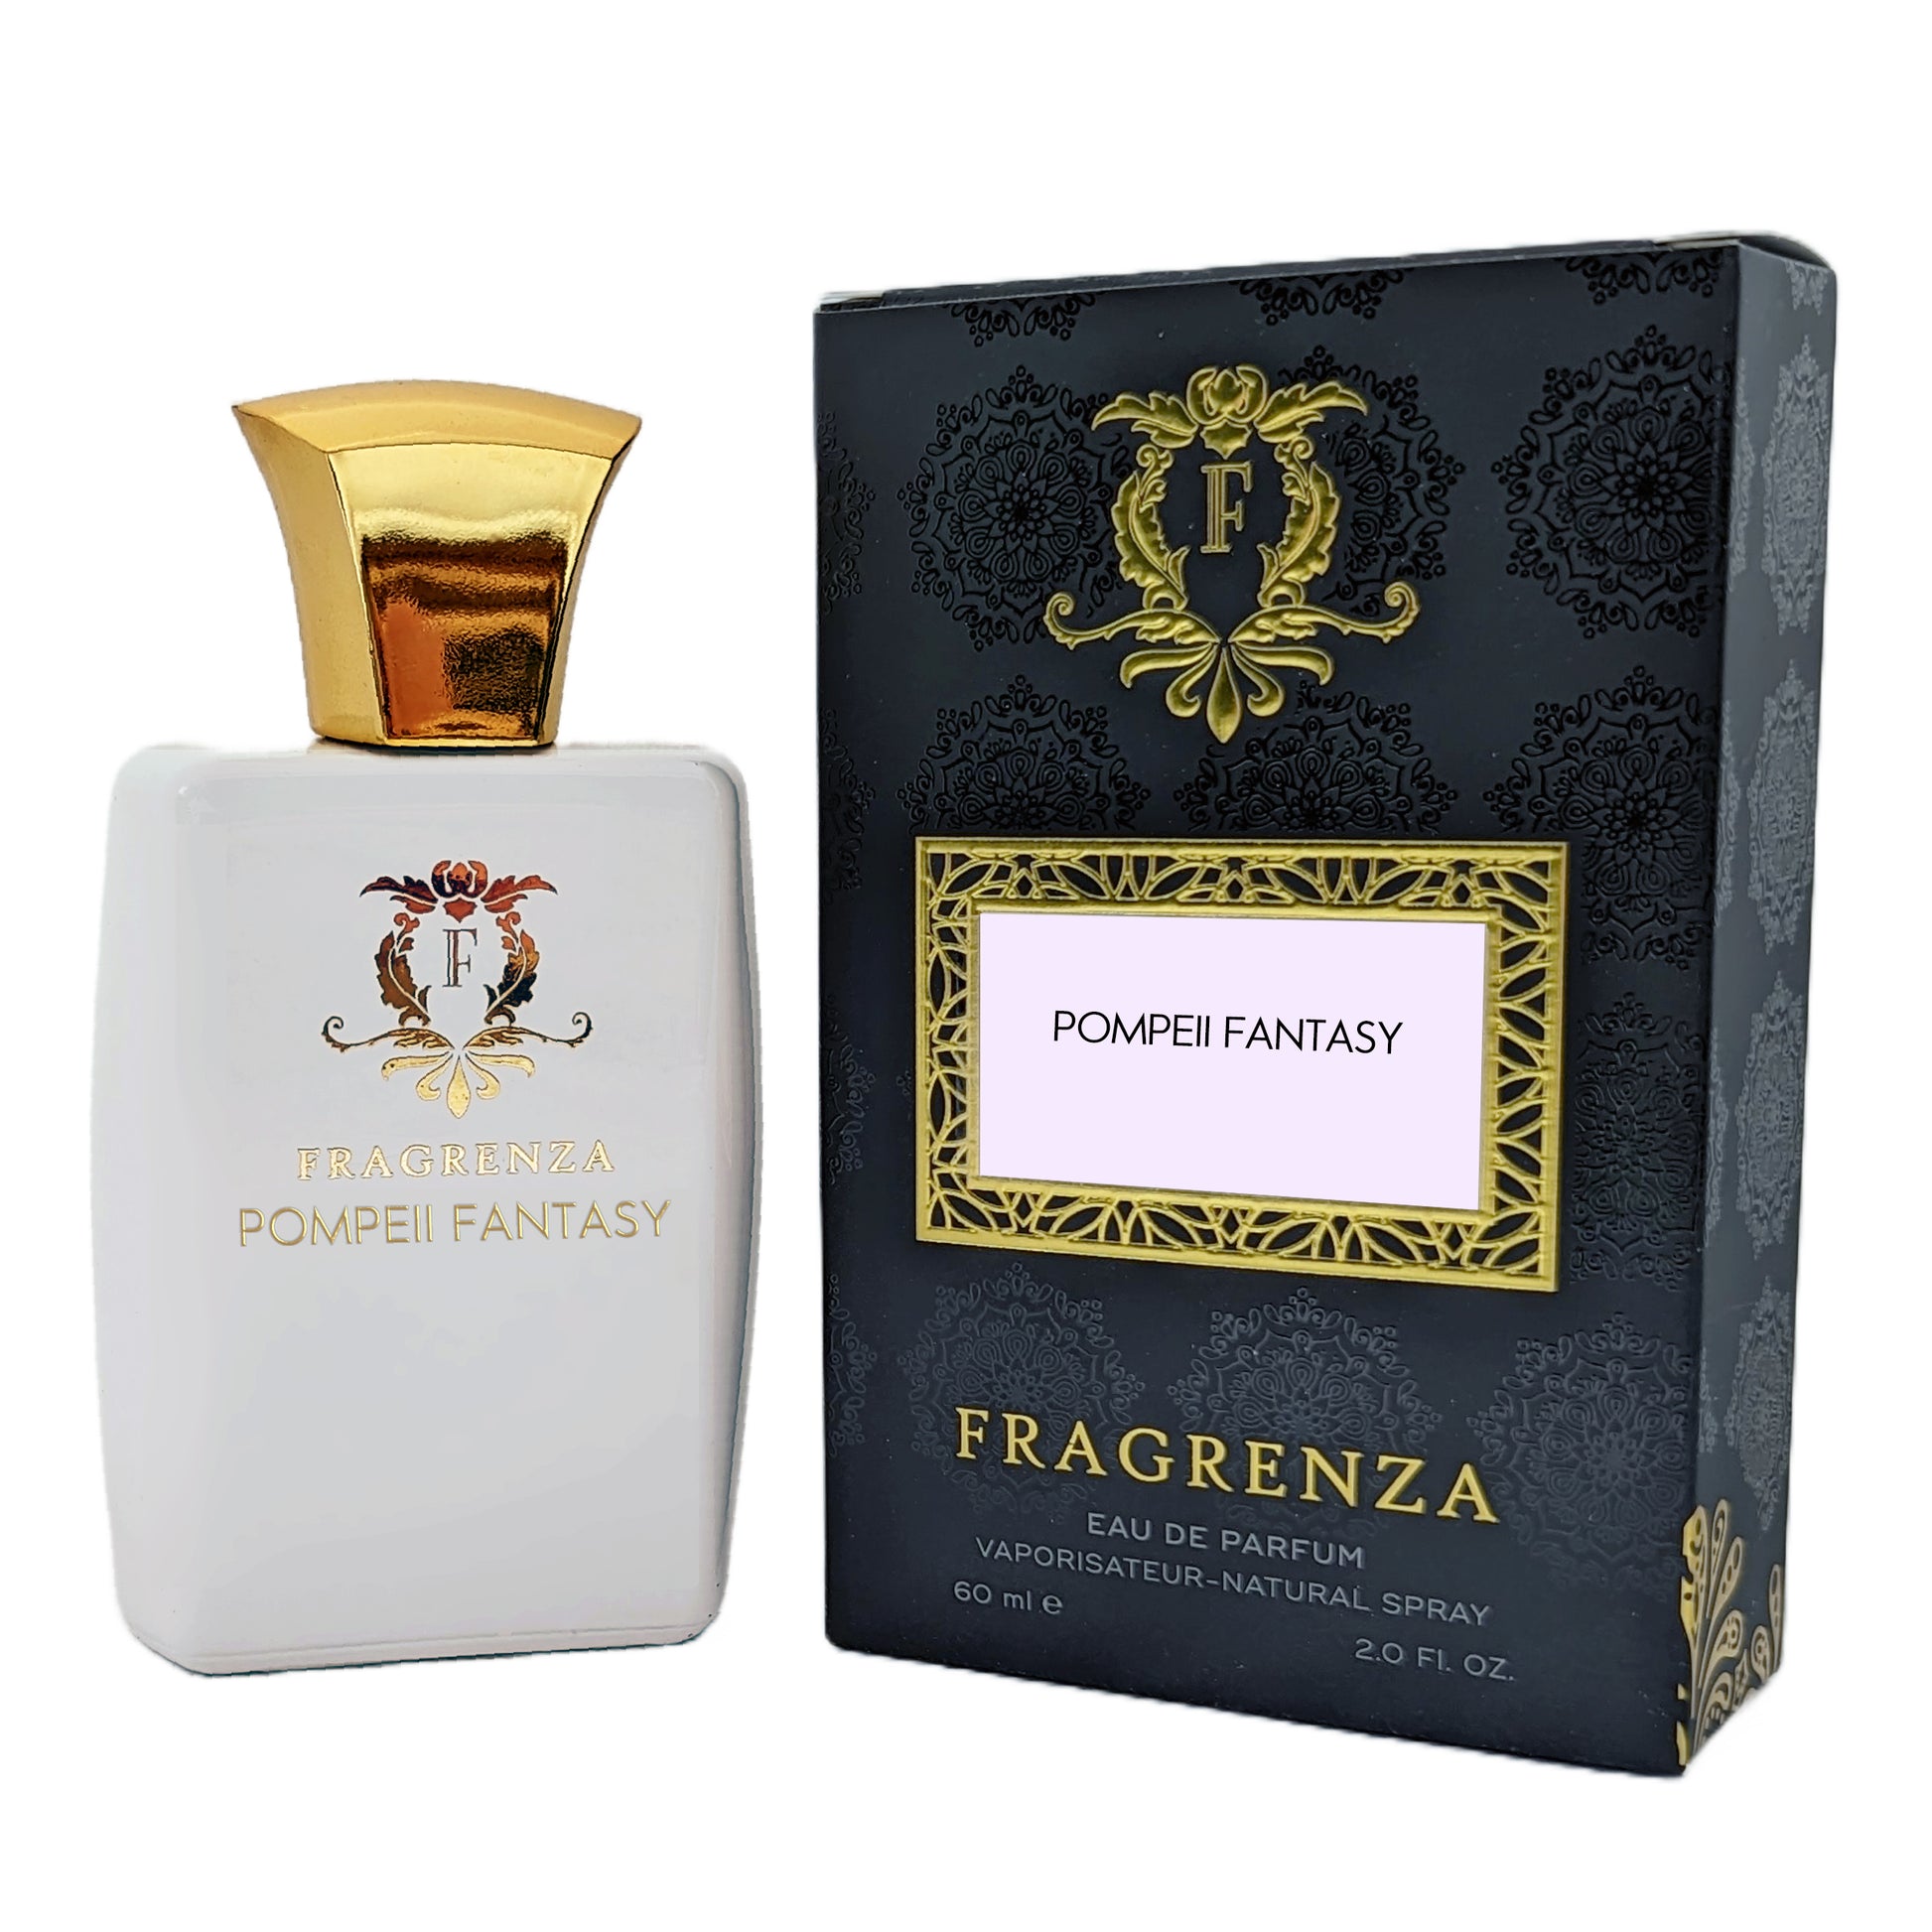 Coco Chanel perfume-100ml - Inspired fragrances